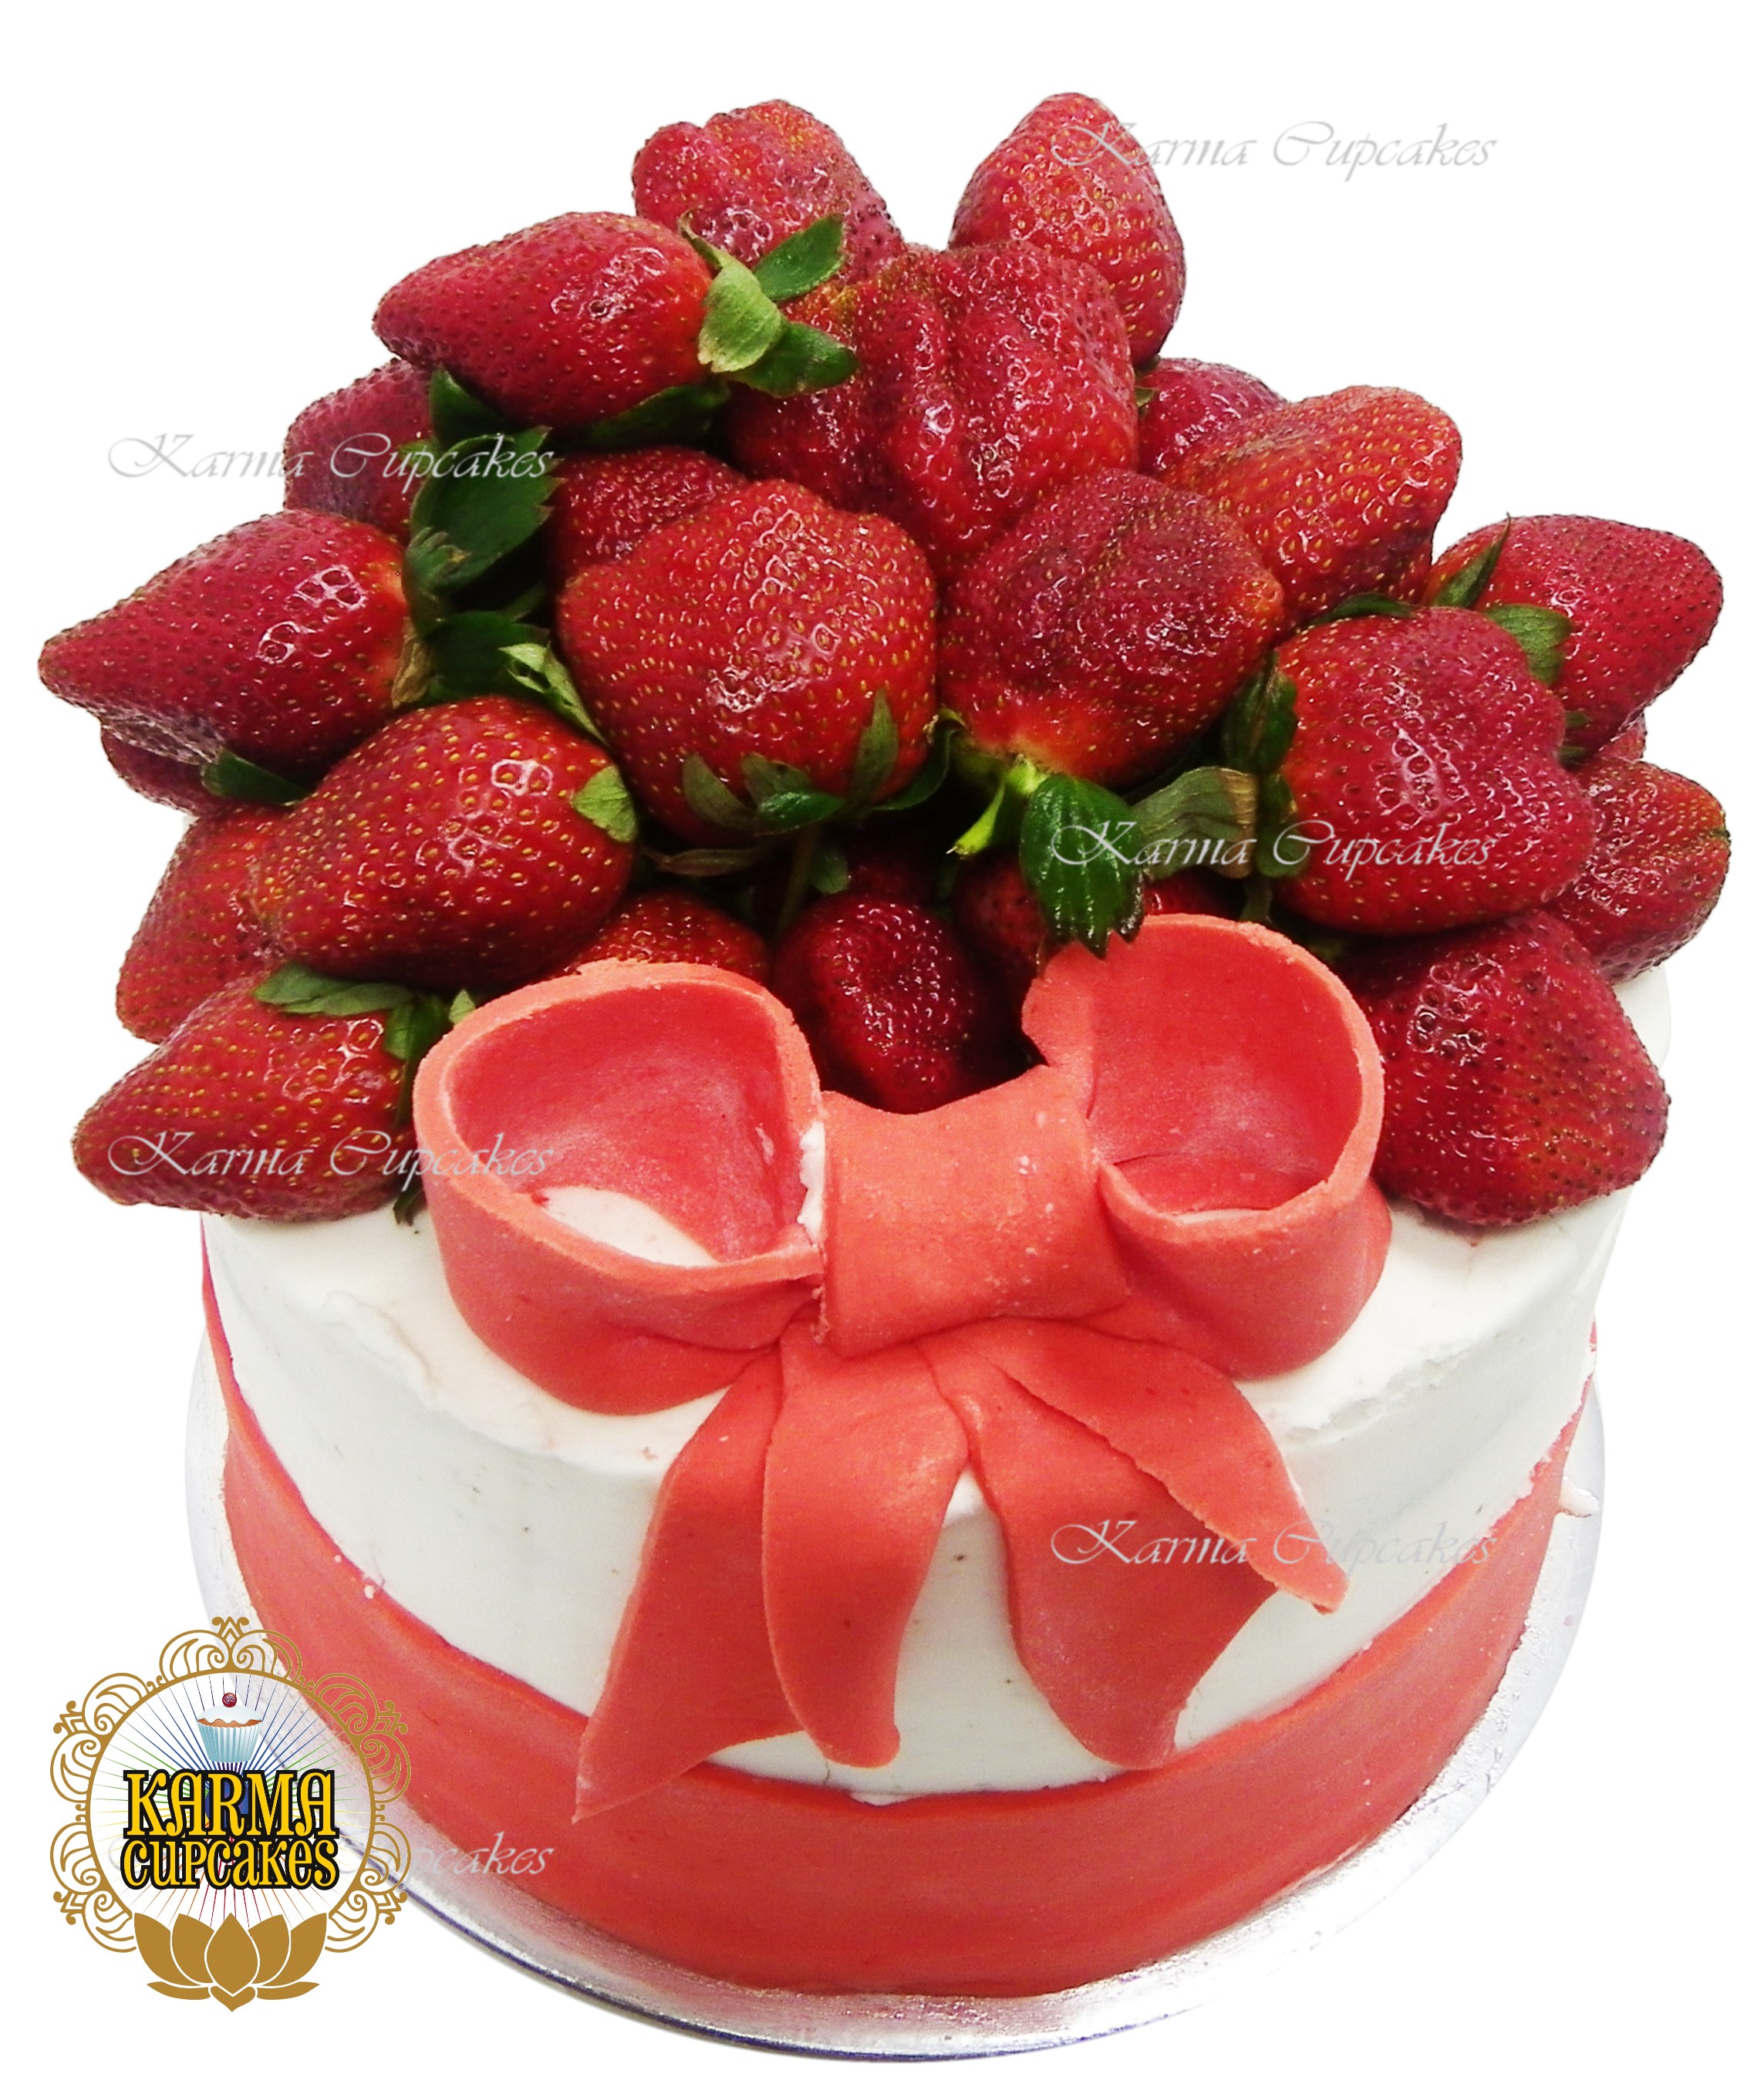 8" Sugar Ribbon Cake with Strawberries